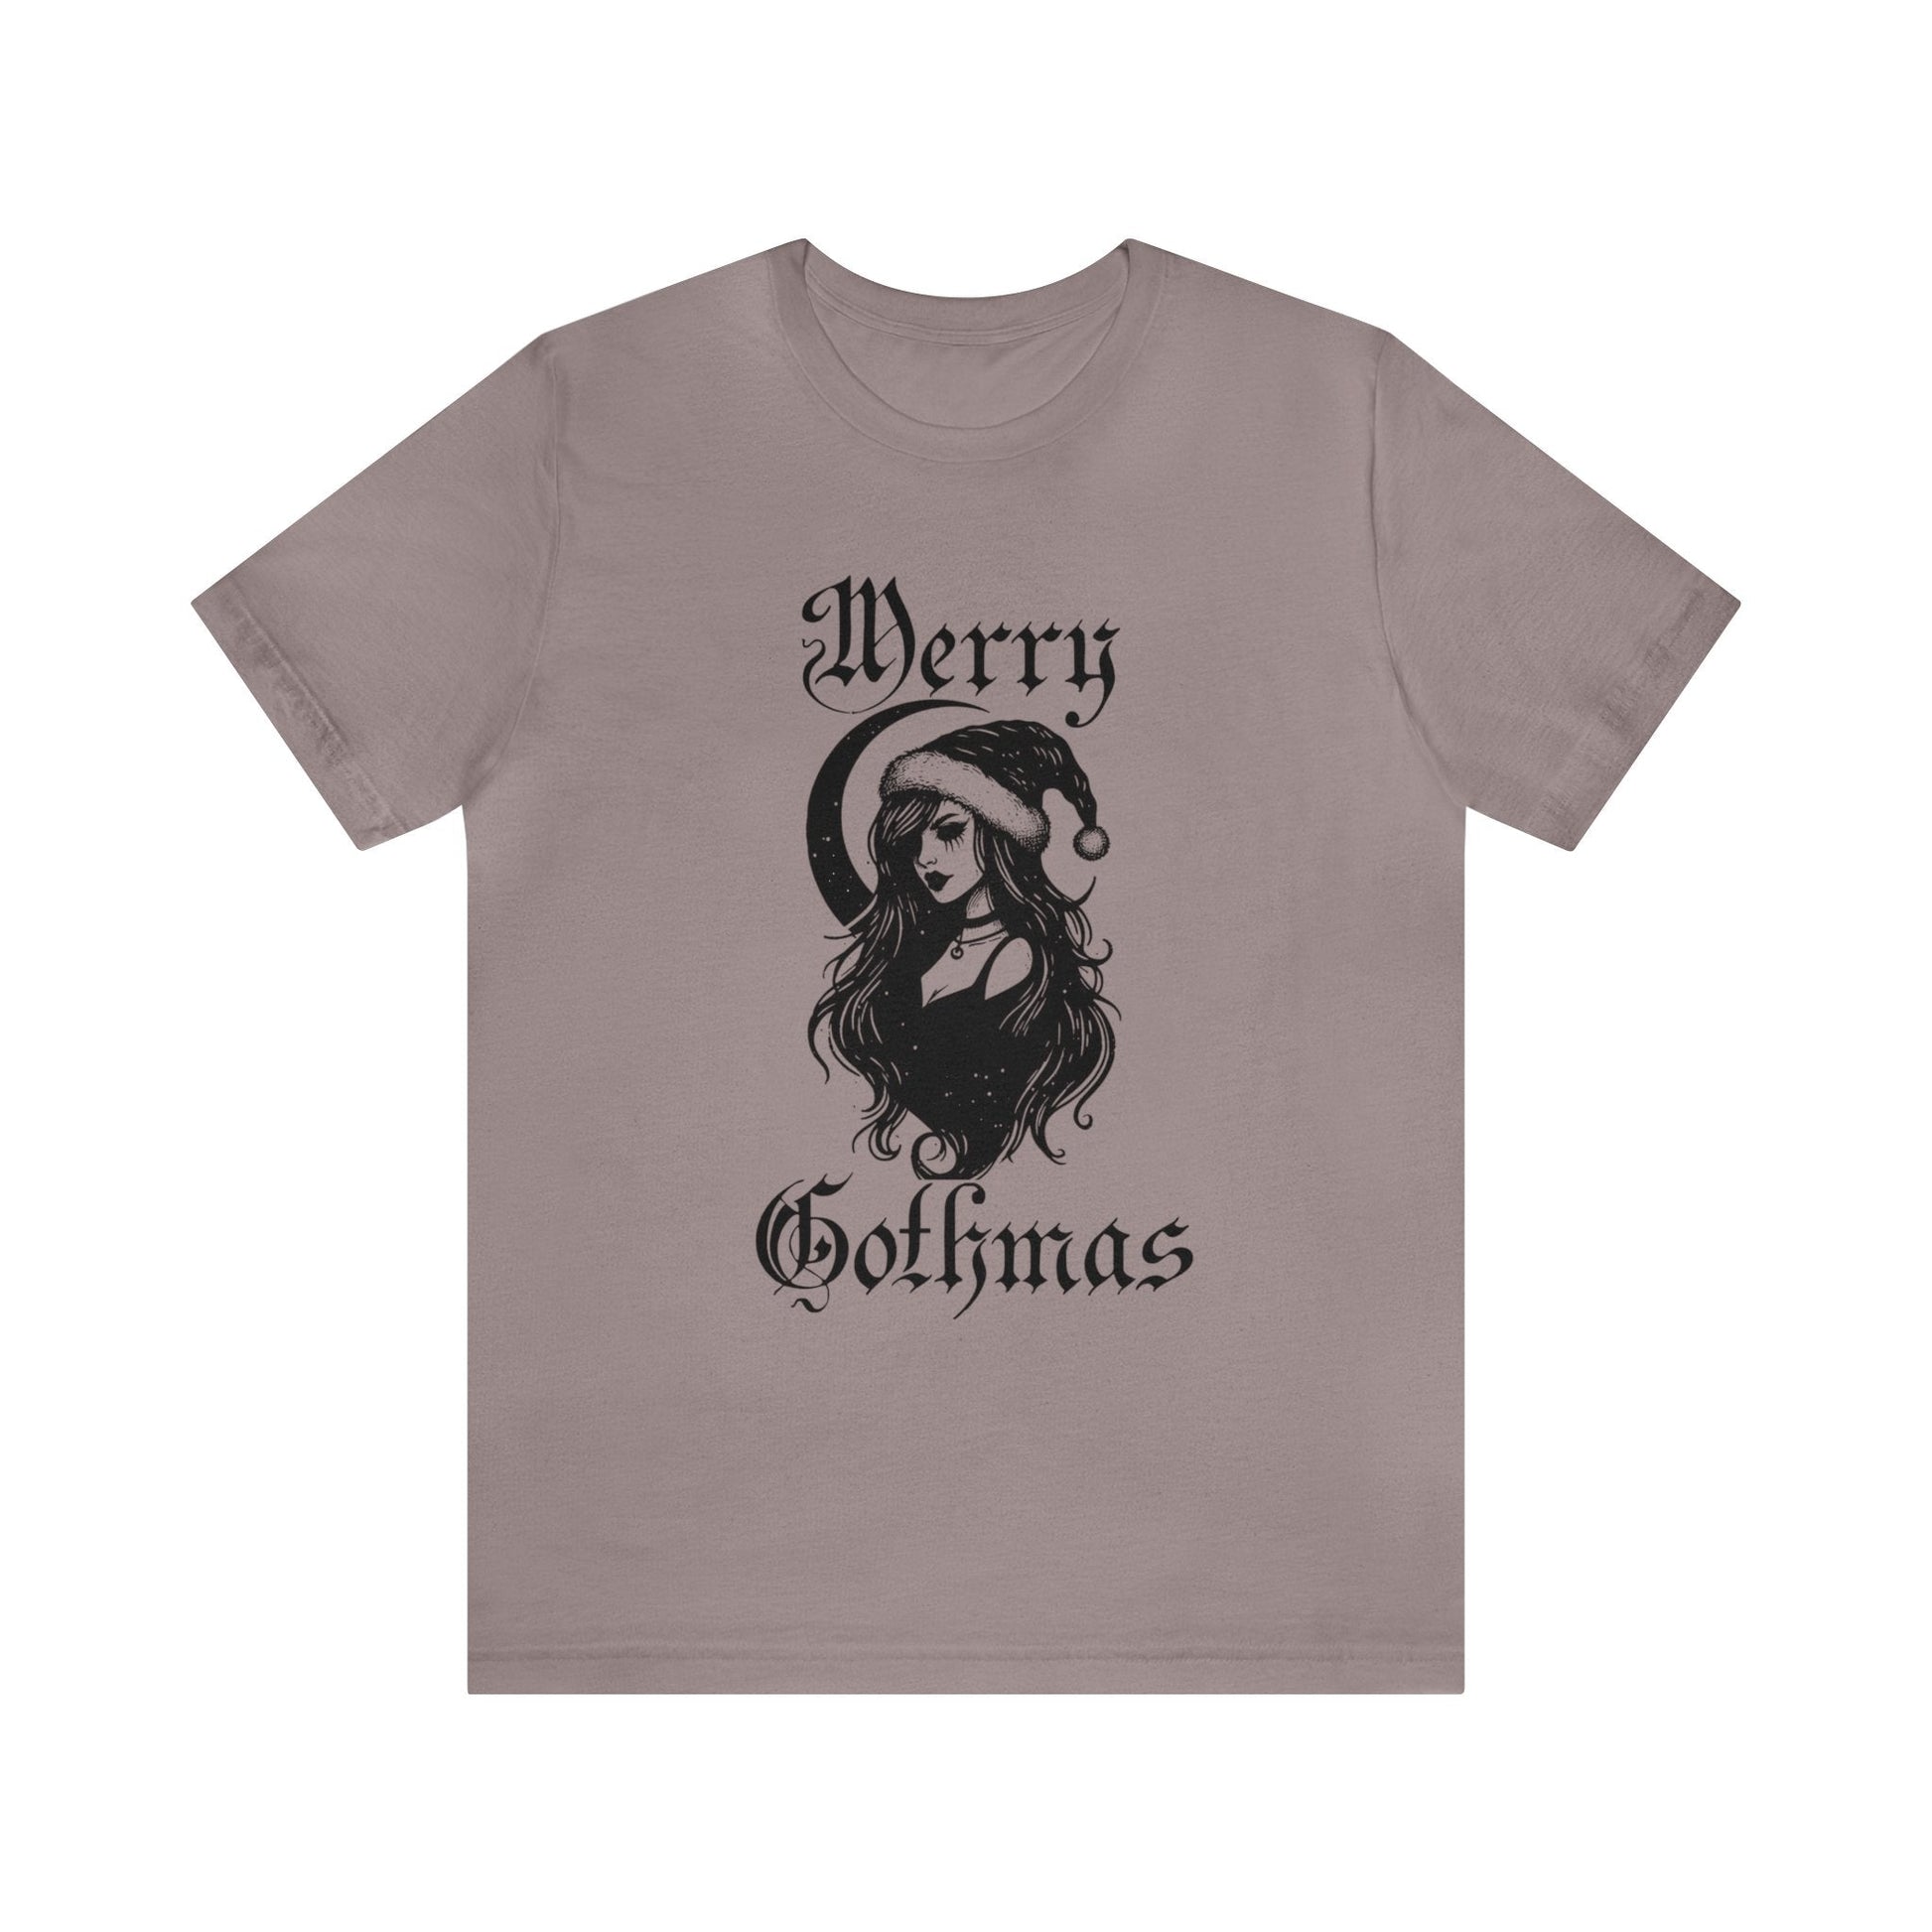 Merry Gothmas Short Sleeve Tee ShirtT - ShirtVTZdesignsPebble BrownXSchristmasclothingCotton